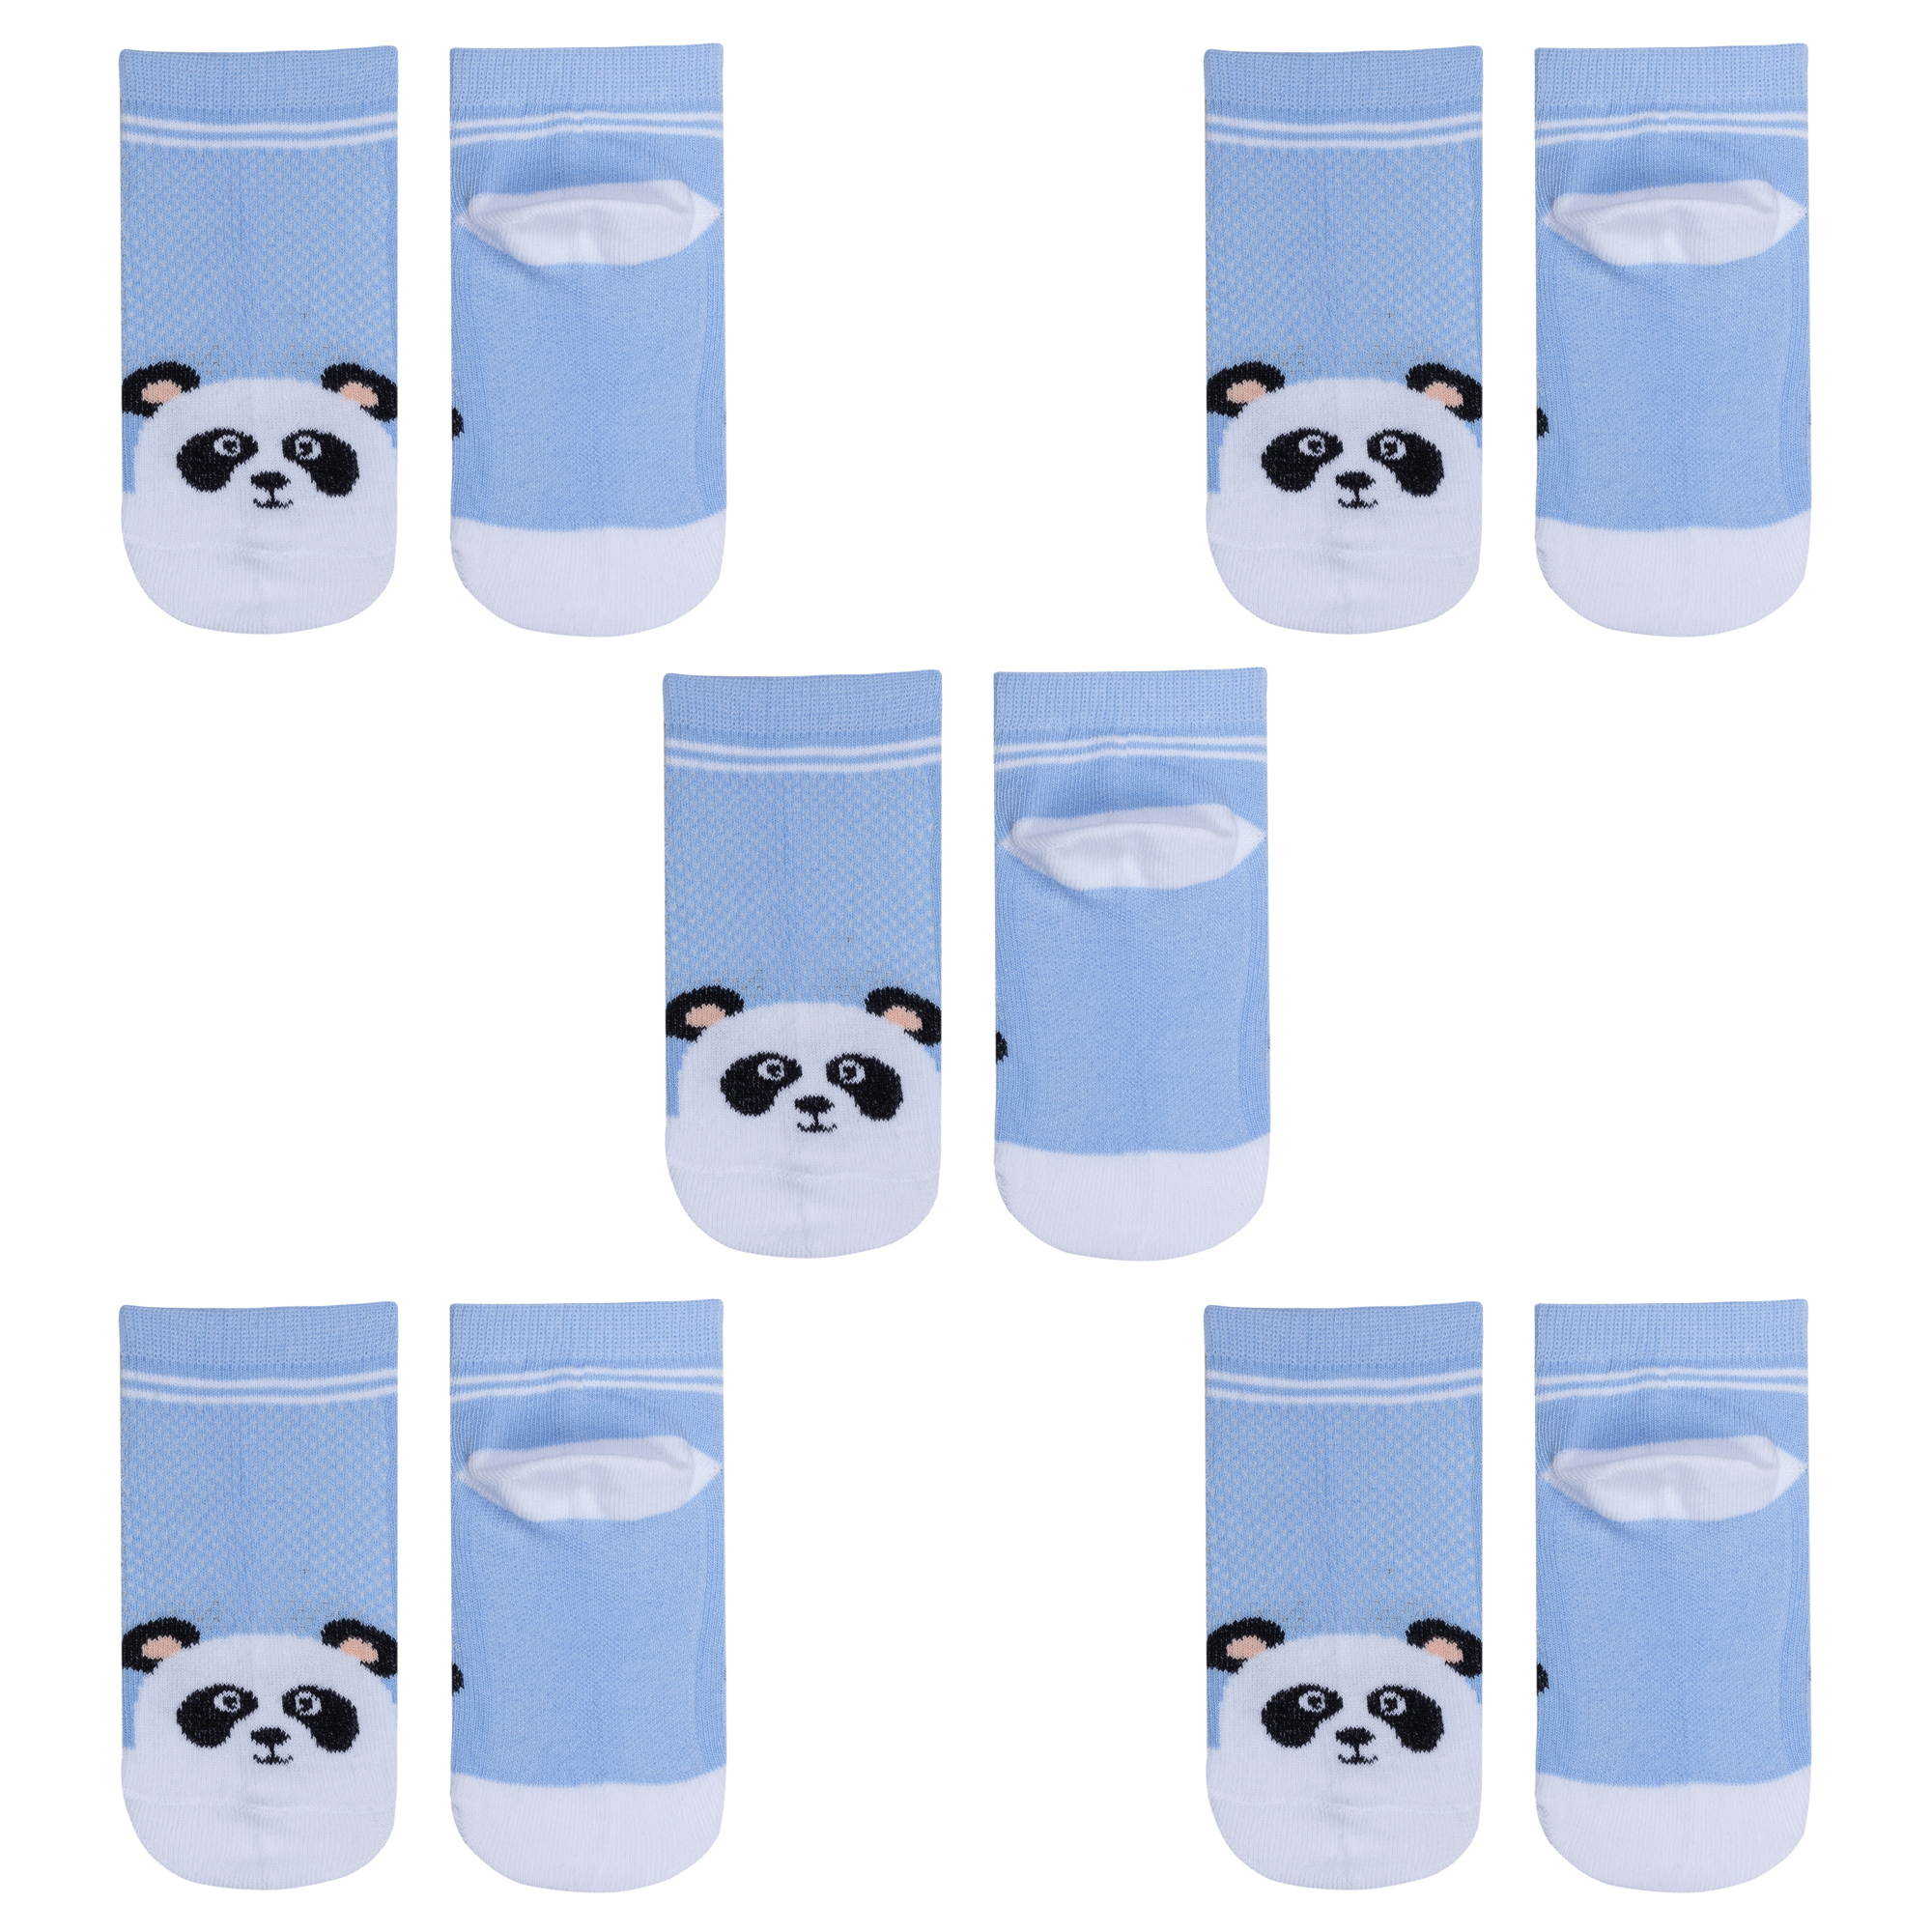 Носки детские Гамма 5-С1649 цв. голубой; белый р. 14-16 носки мужские гамма р 23 25 с466